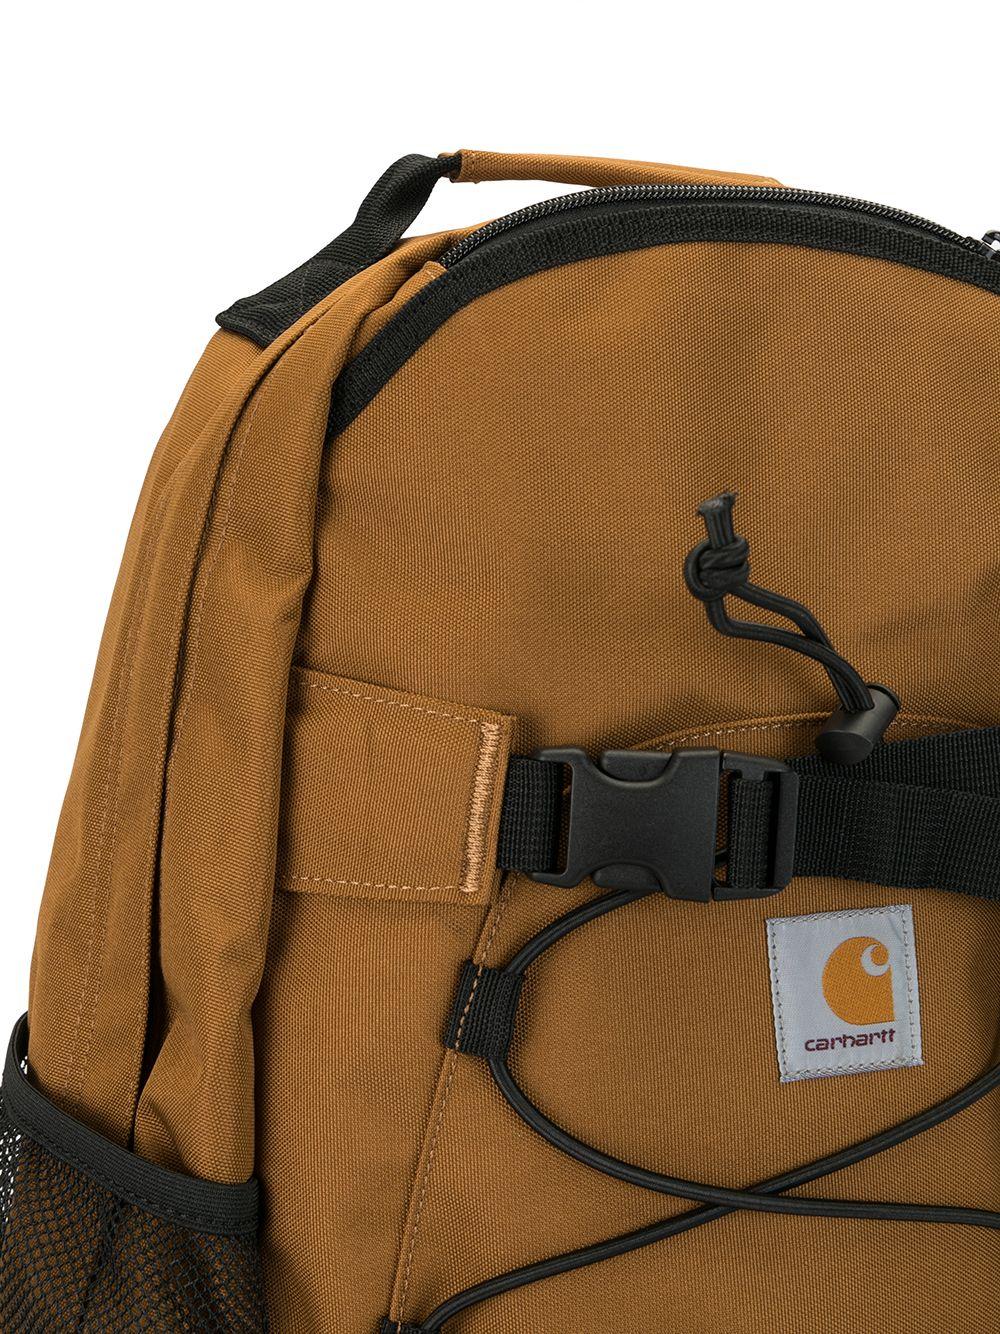 Carhartt WIP Kickflip Utilitarian Backpack in Brown for Men - Lyst